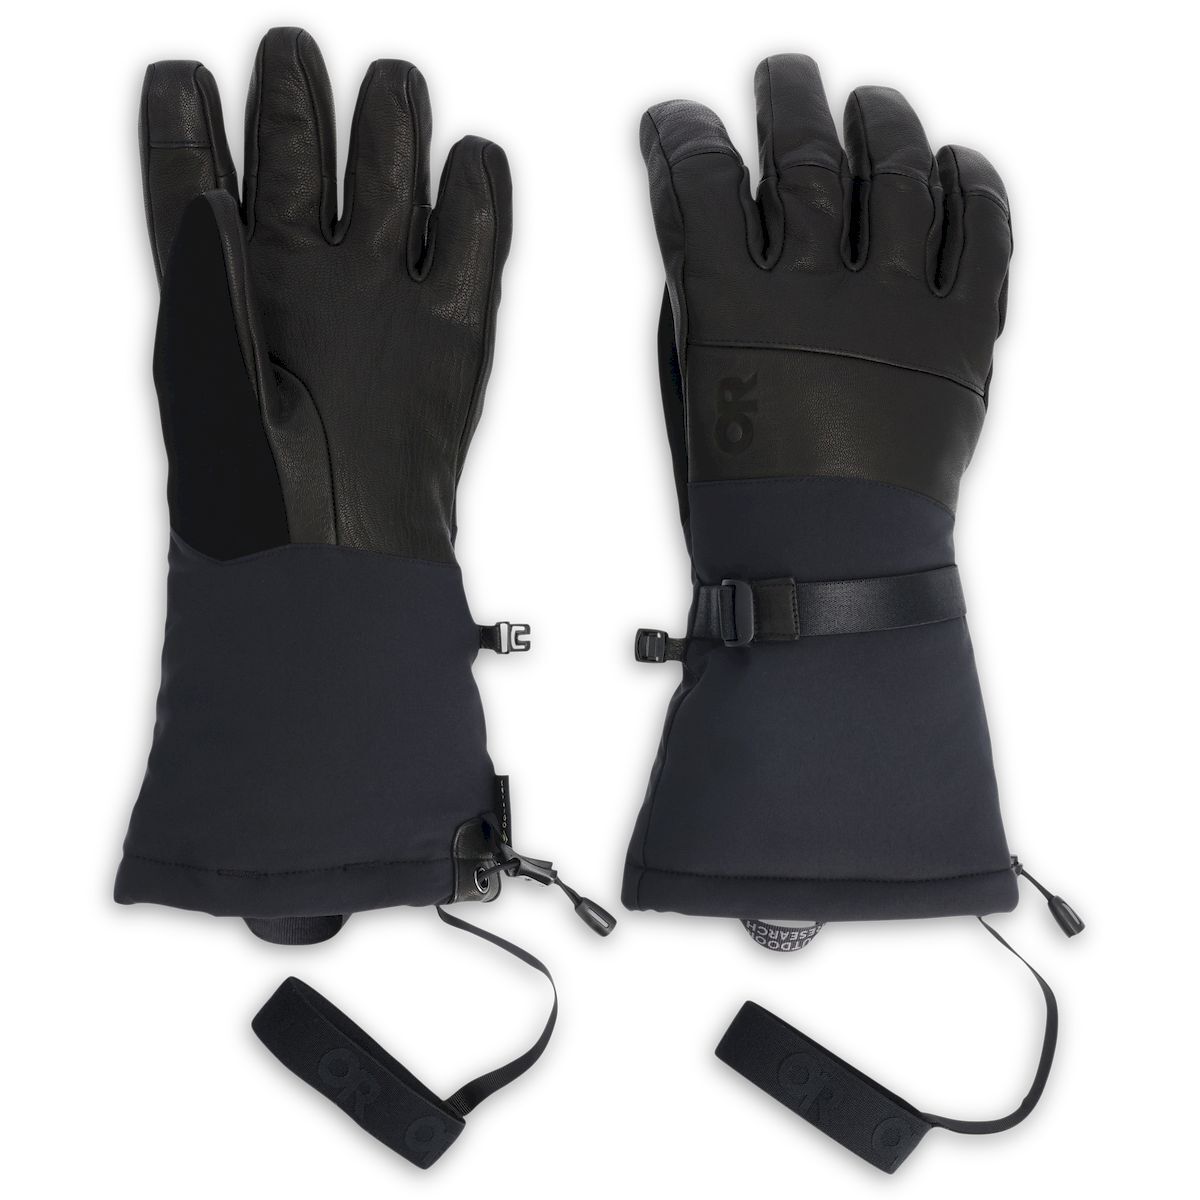 Outdoor Research Carbide Sensor Gloves - Ski gloves - Men's